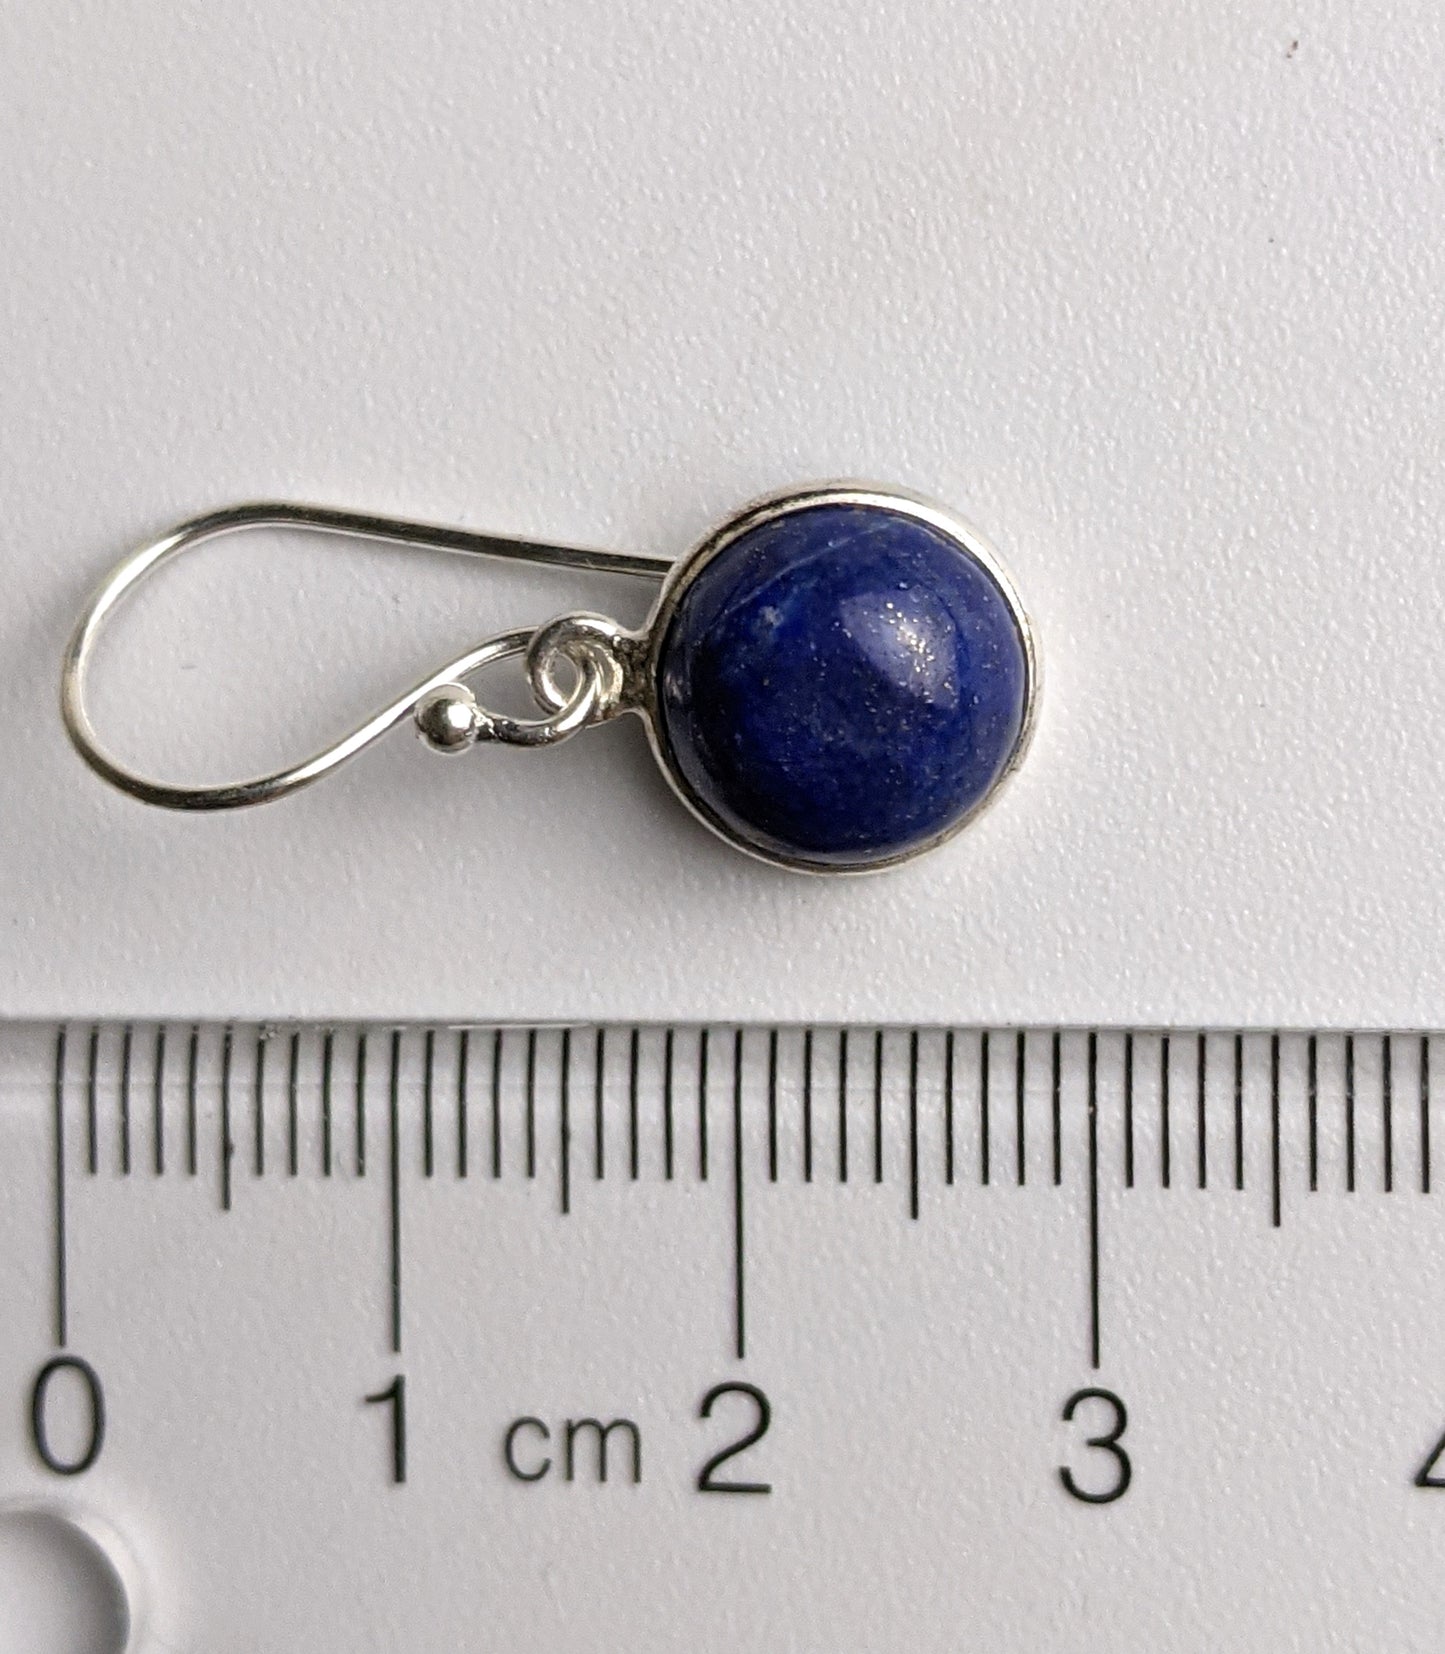 The Classic Drop Earring - Lapis Lazuli